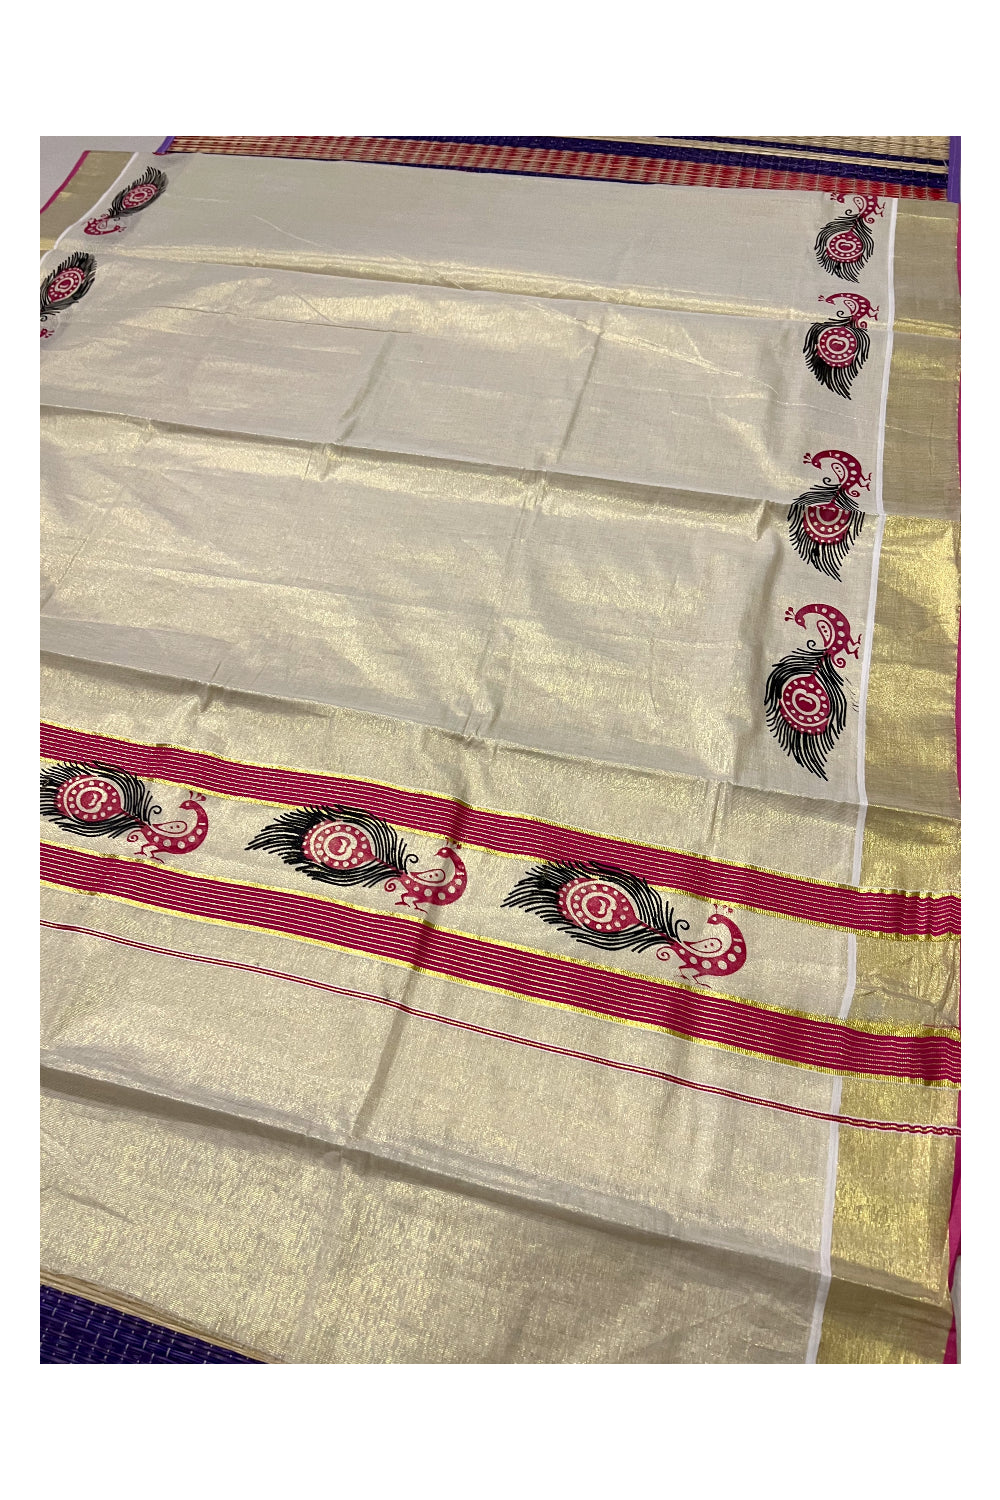 Kerala Tissue Kasavu Saree with Pink and Black Peacock Block Printed Design